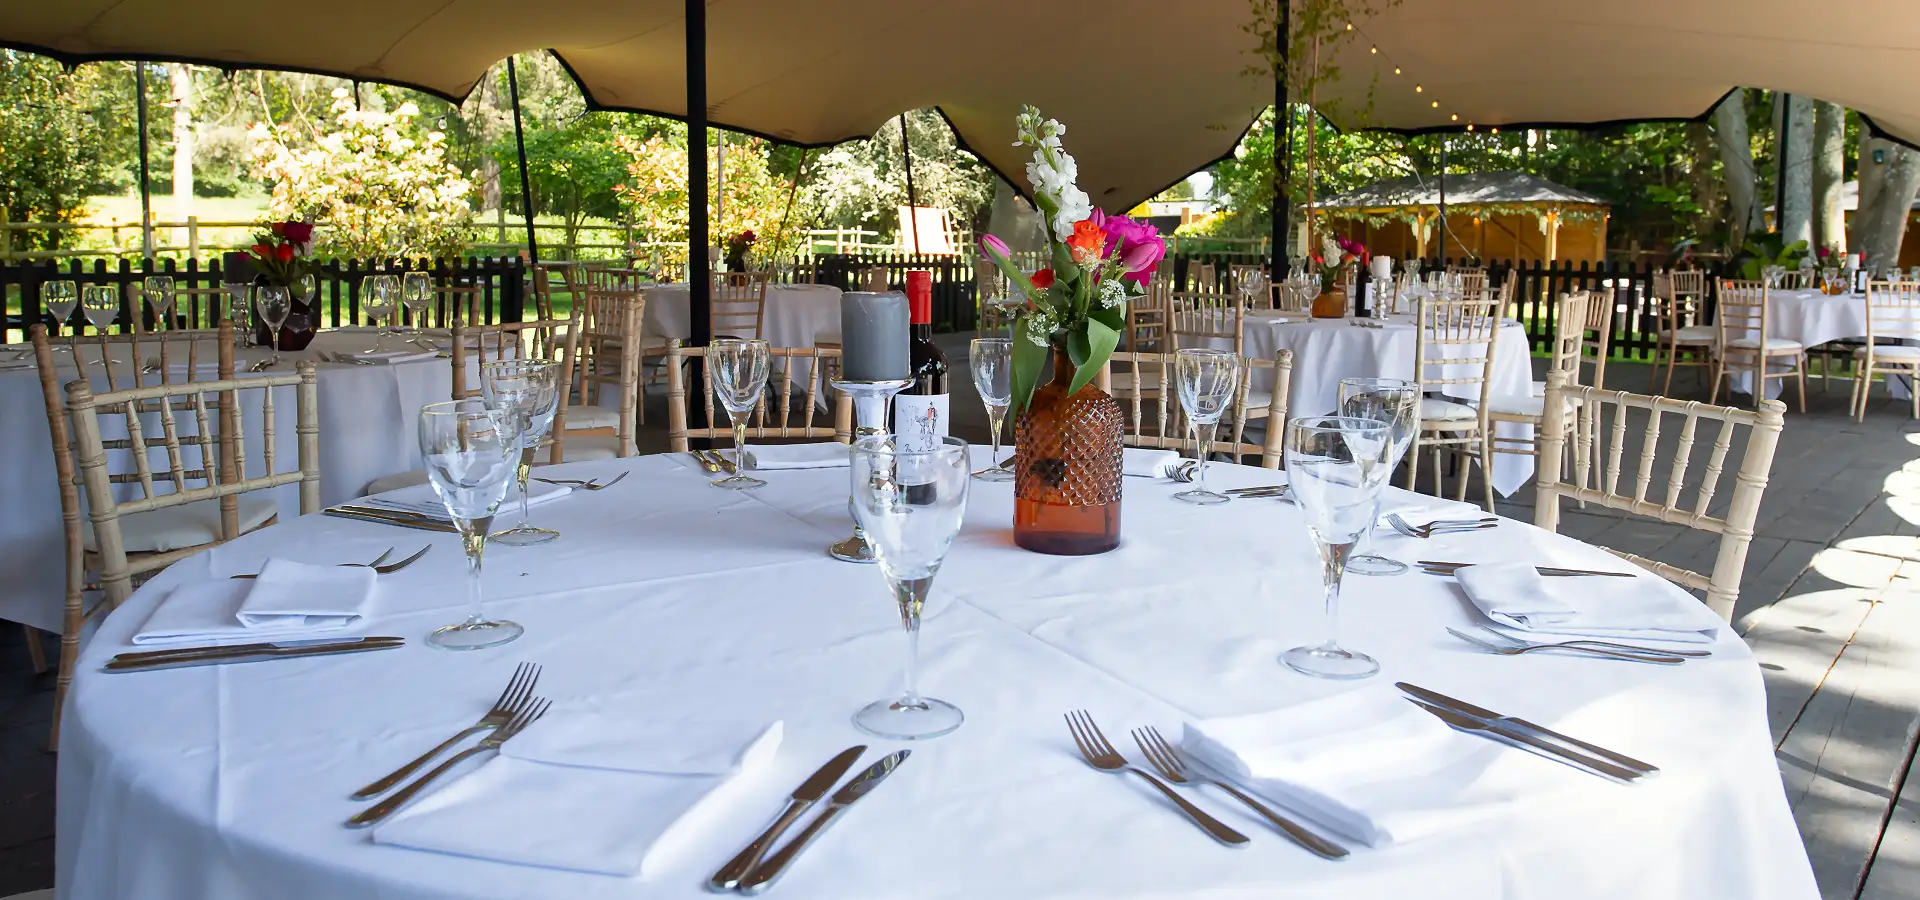 The Crown Inn Wedding Set Table